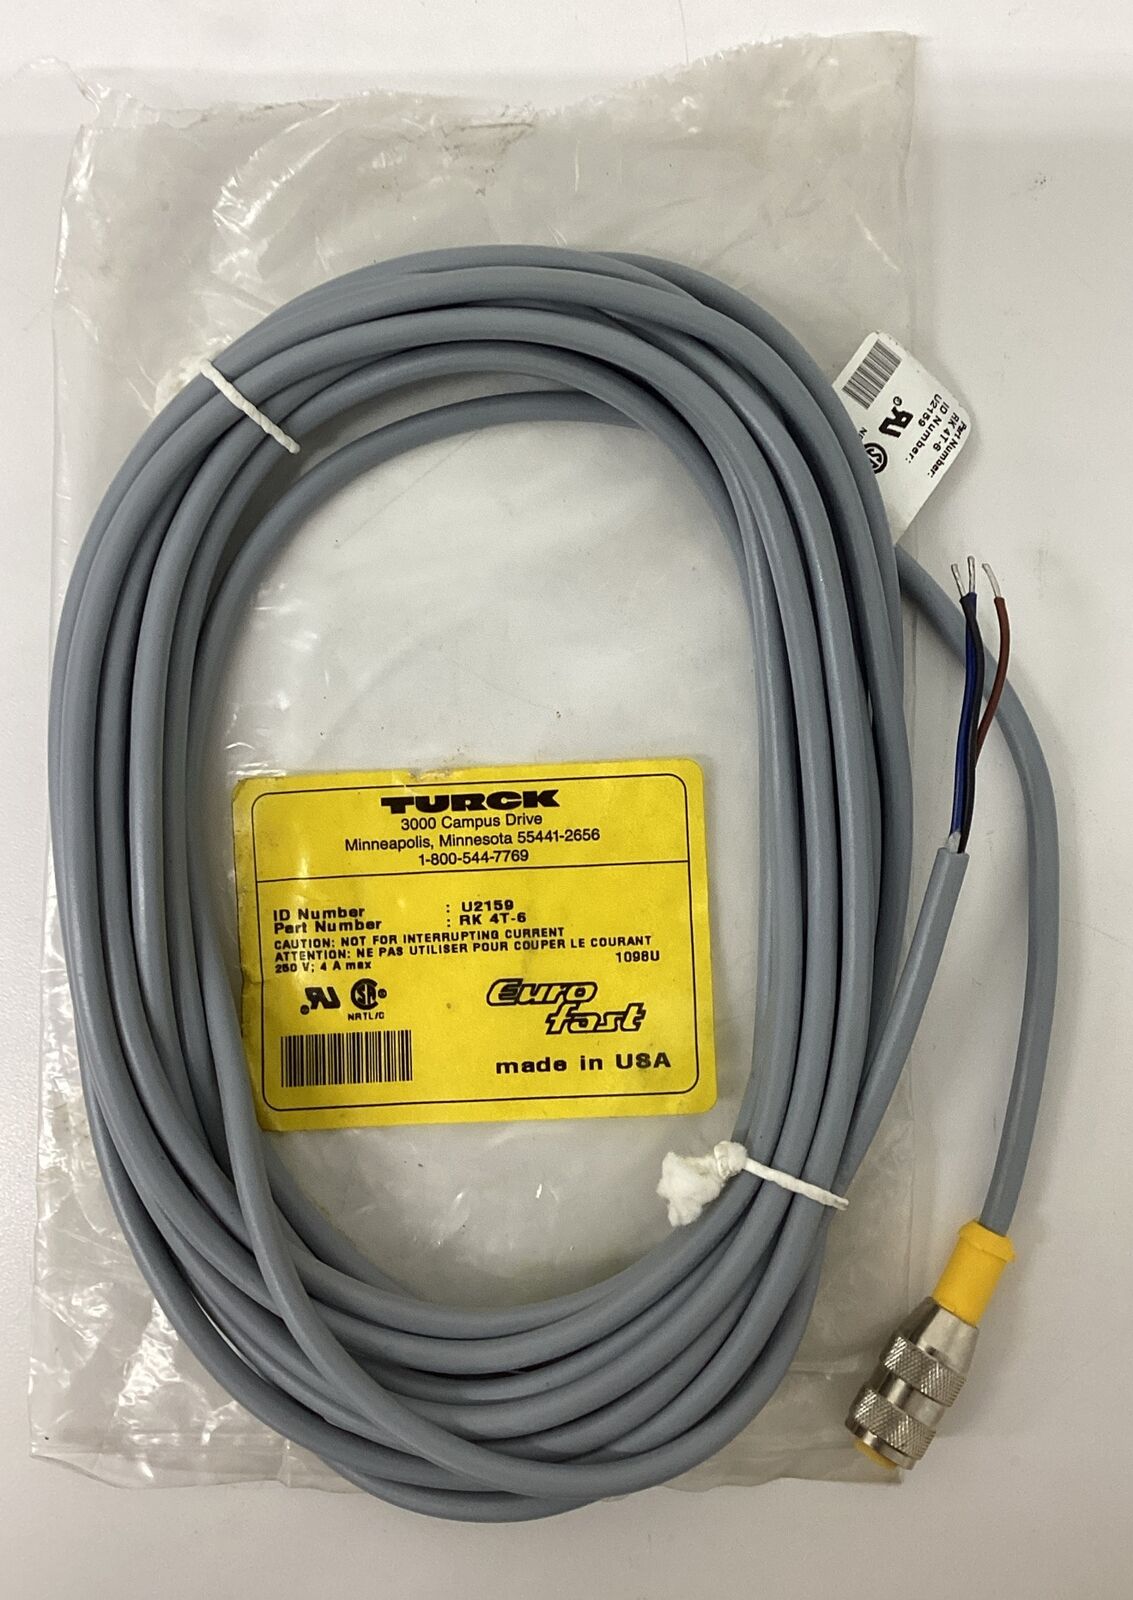 Turck RK4T-6 / U2159 M12, 3-Wire Single End Cable 4M (CBL152)